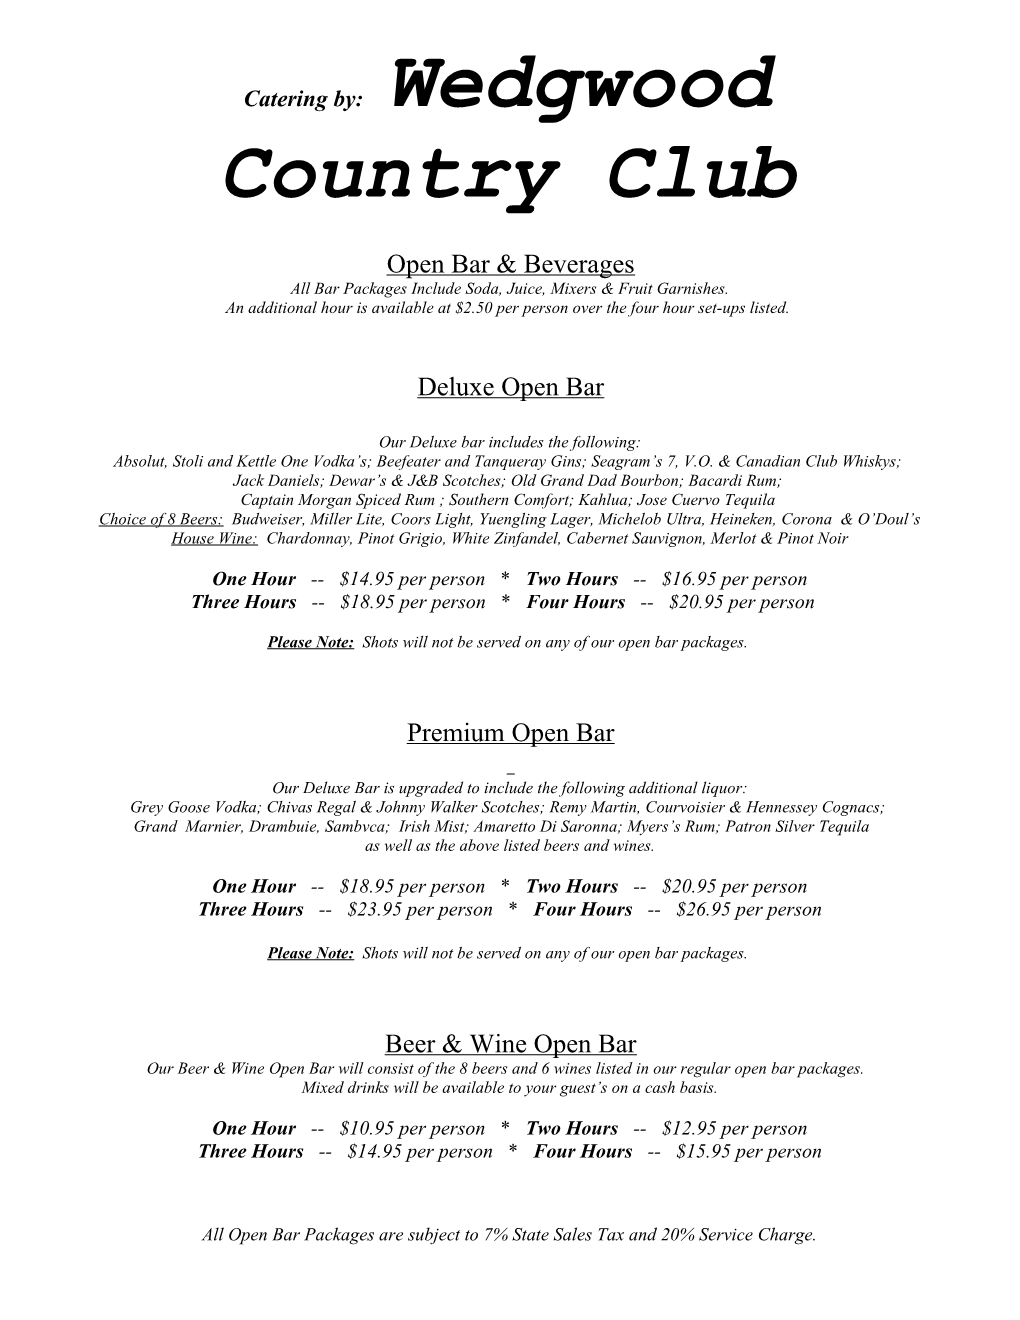 Wedgwood Country Club